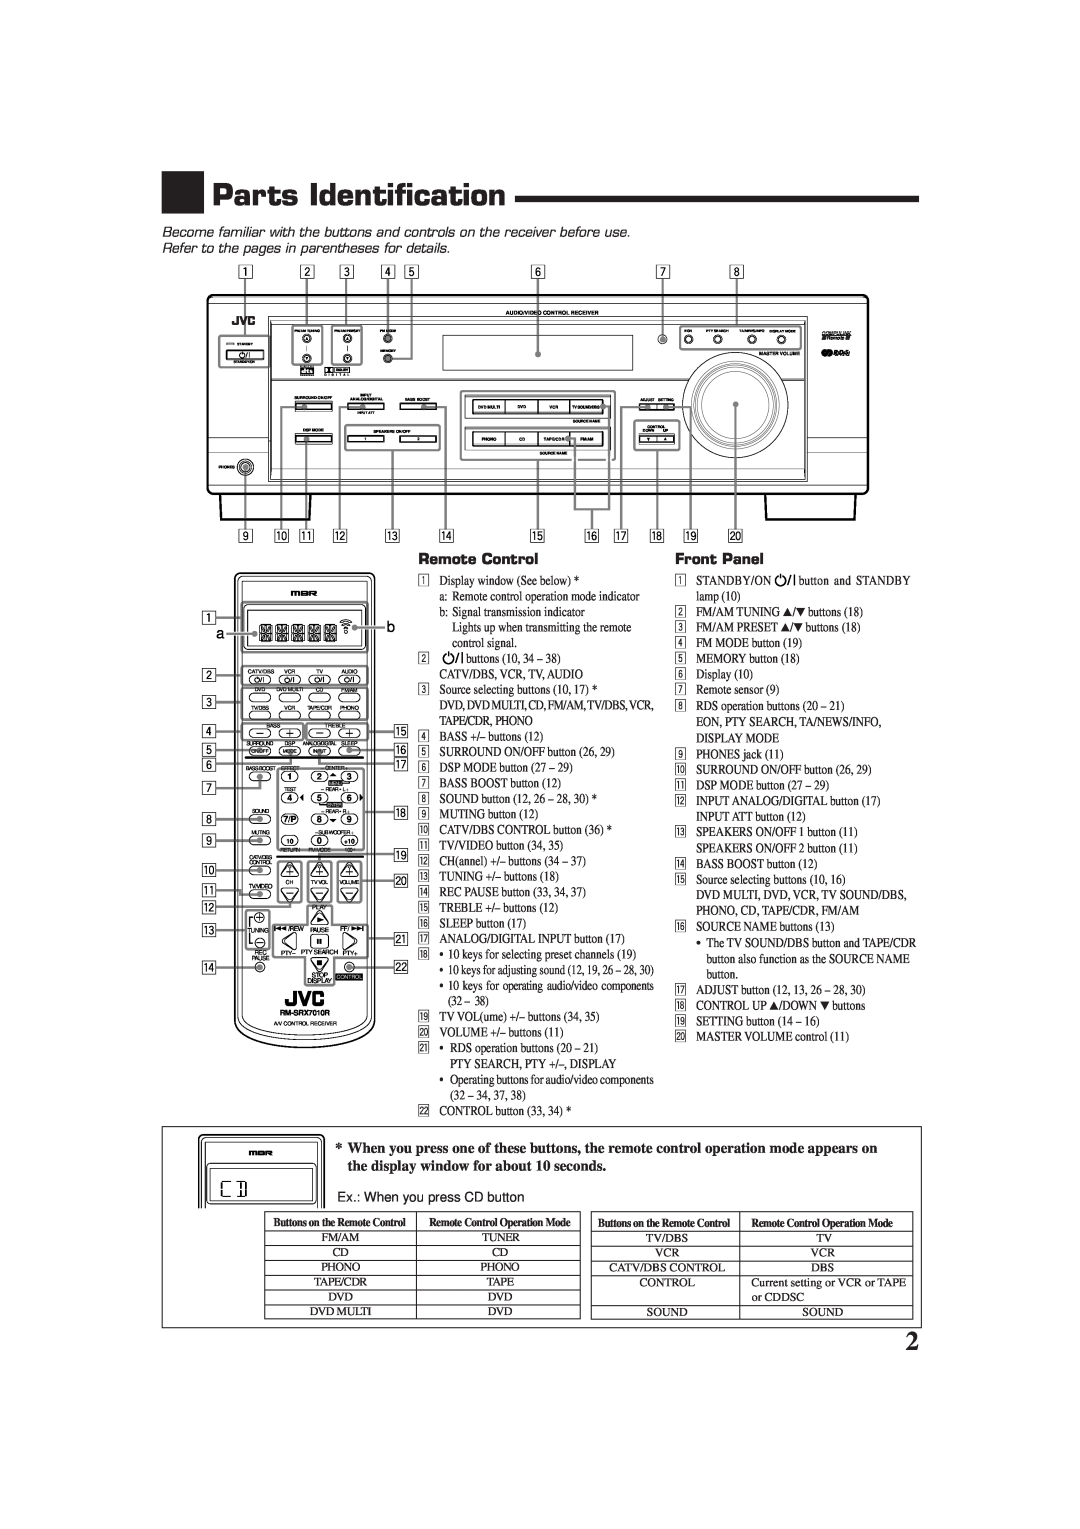 JVC RX-7012RSL, RX-7010RBK manual Parts Identification, p q w e r, t y u i o, Remote Control, Front Panel 